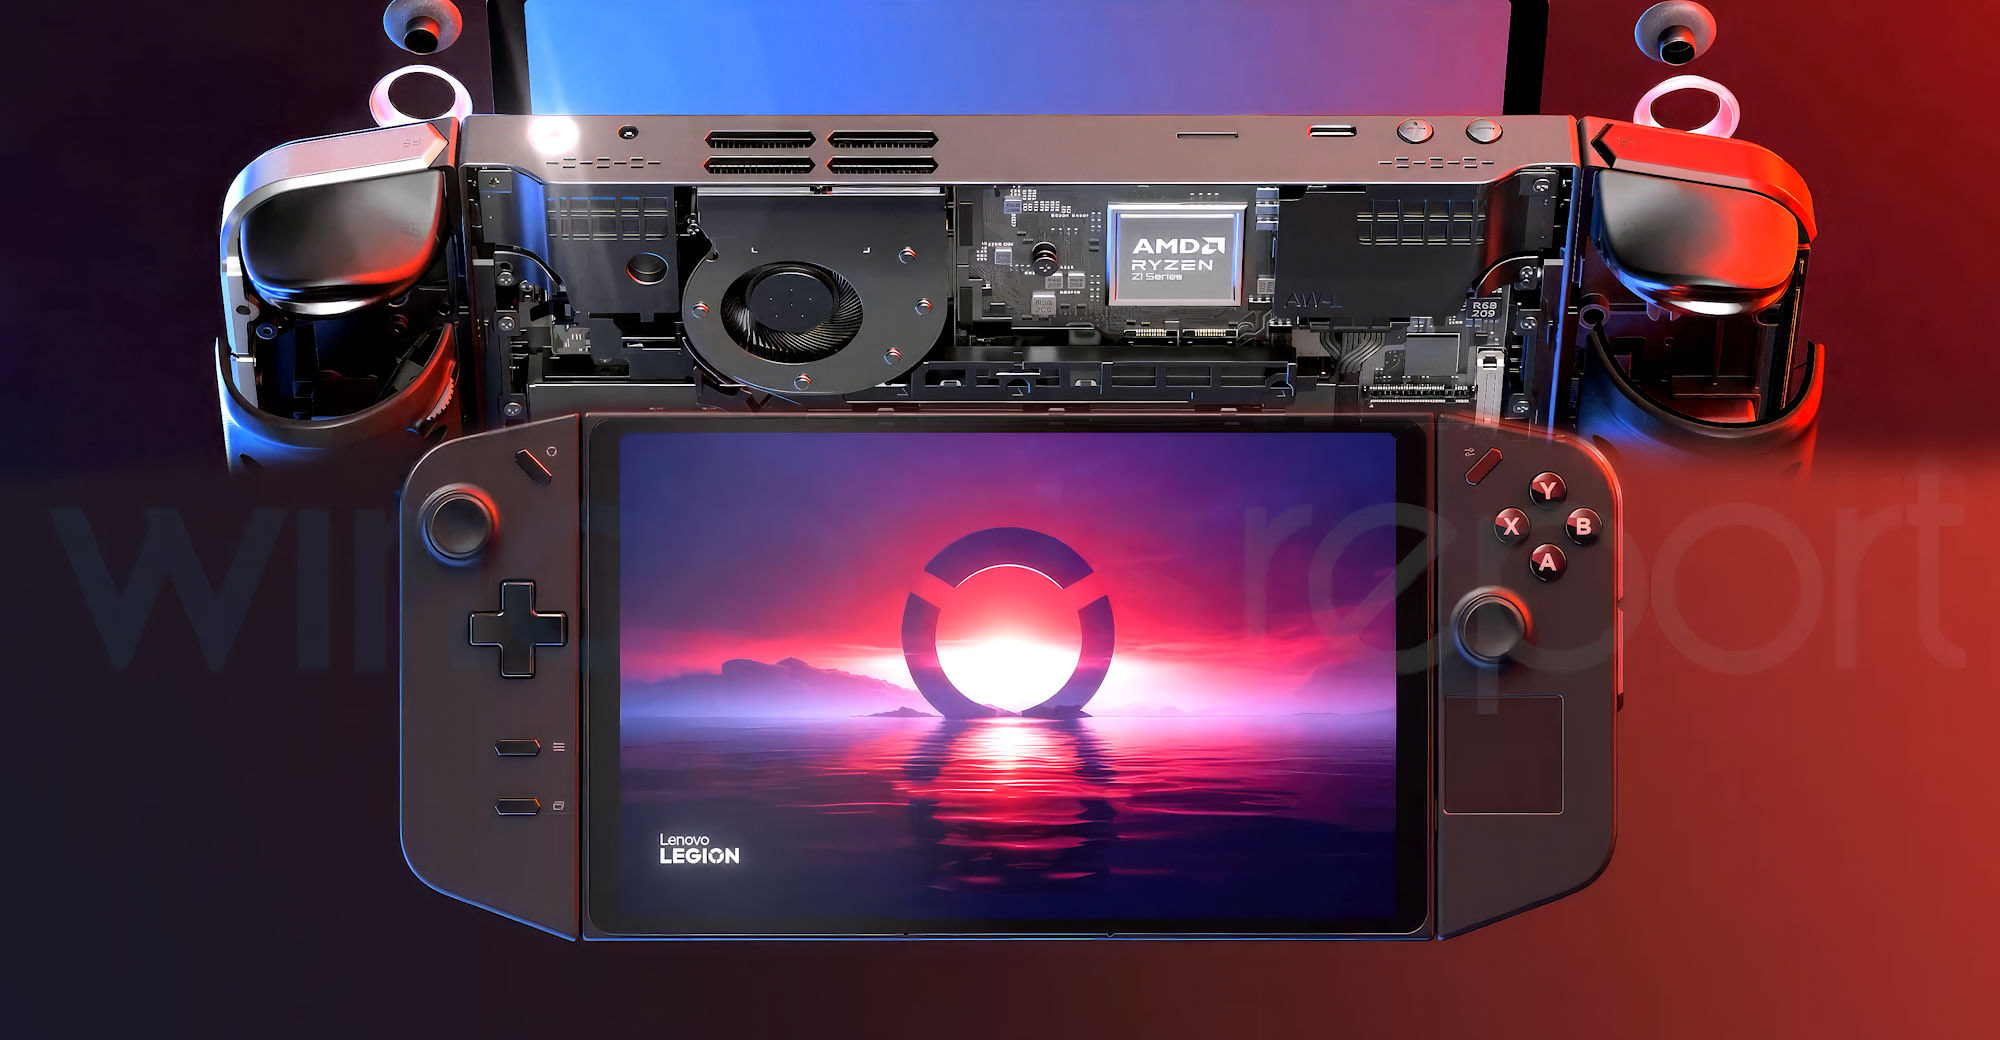 Lenovo Legion Go: Asus ROG Ally adversary announced with AMD Ryzen